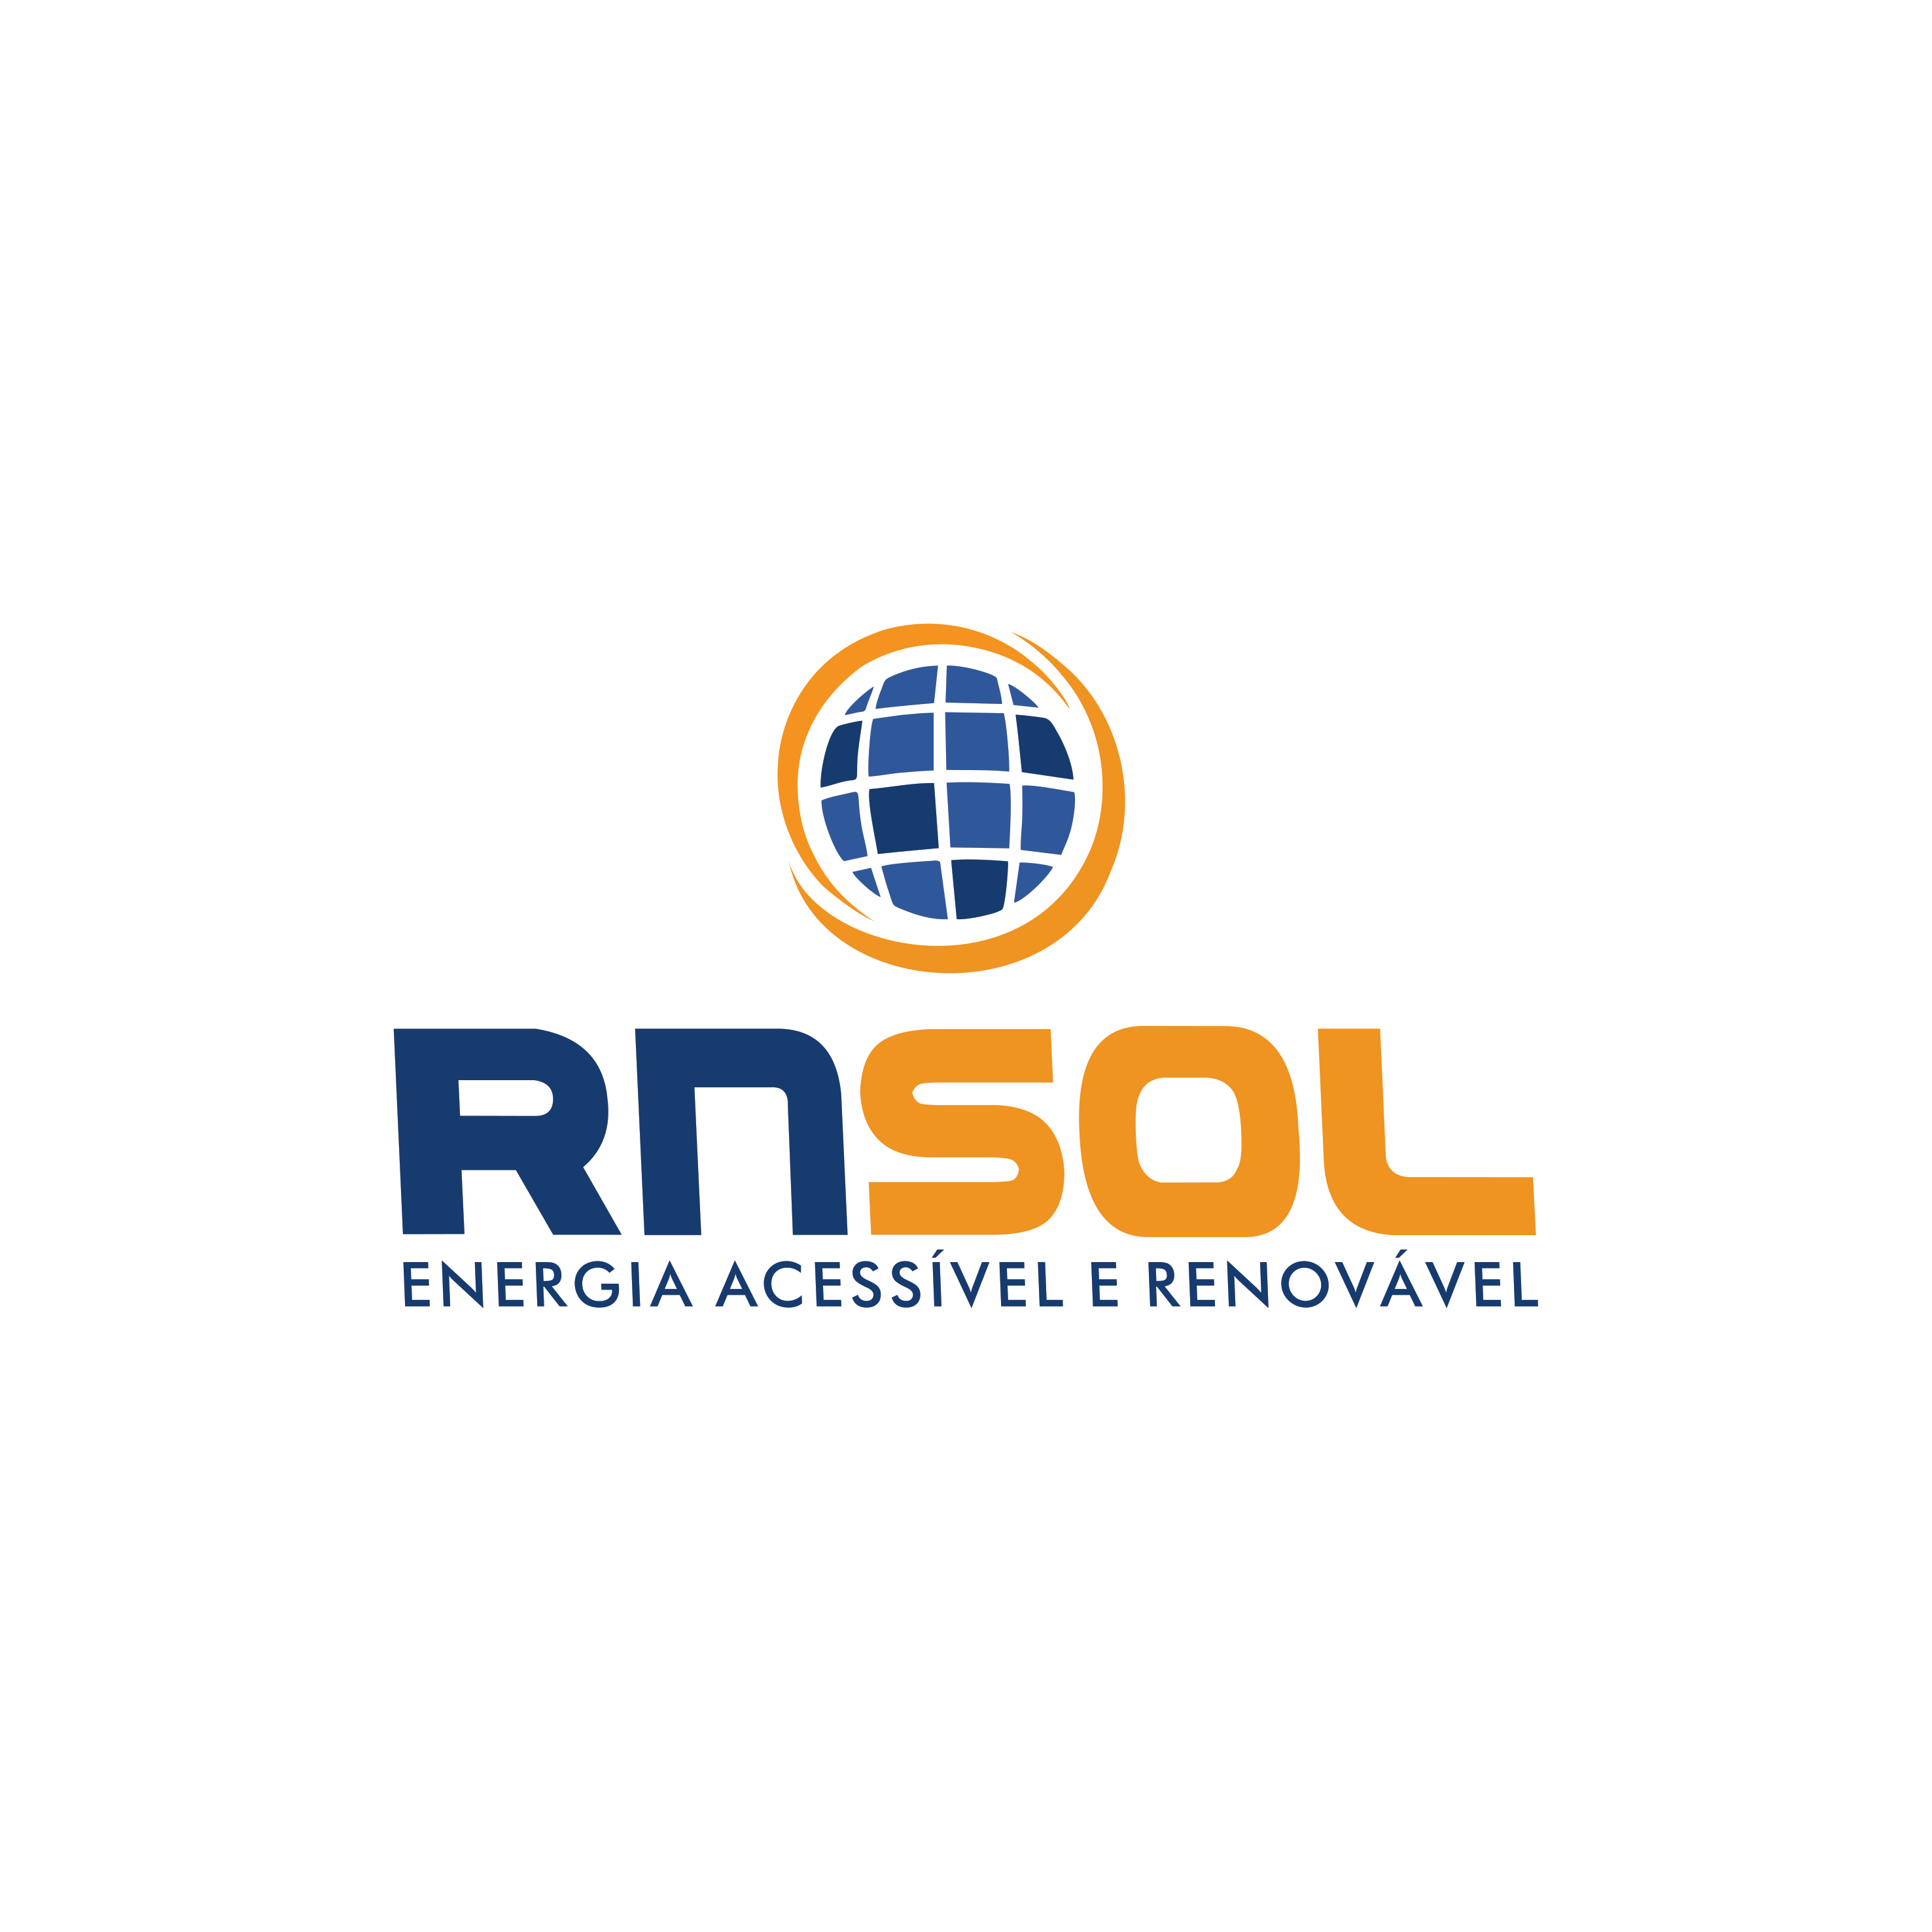 RN Sol – Energia Acessível e Renovável